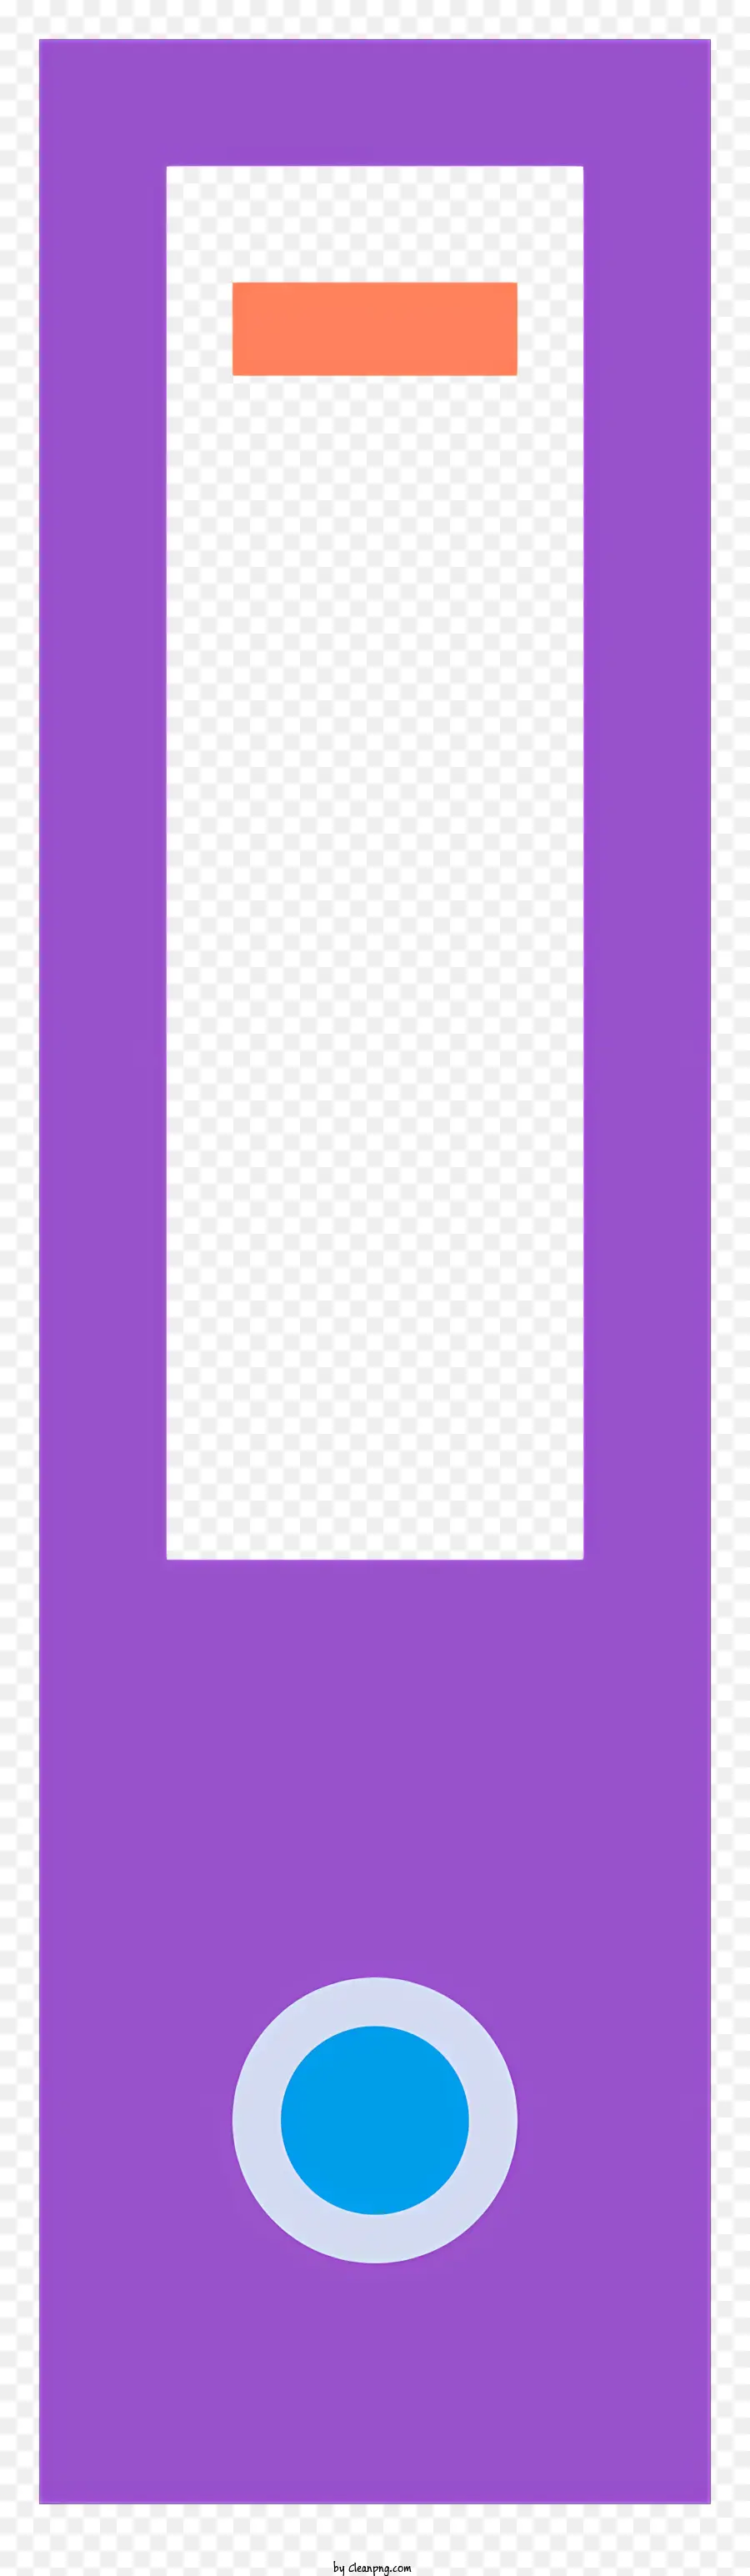 icon purple rectangular box rectangular button circular button orange rectangular button